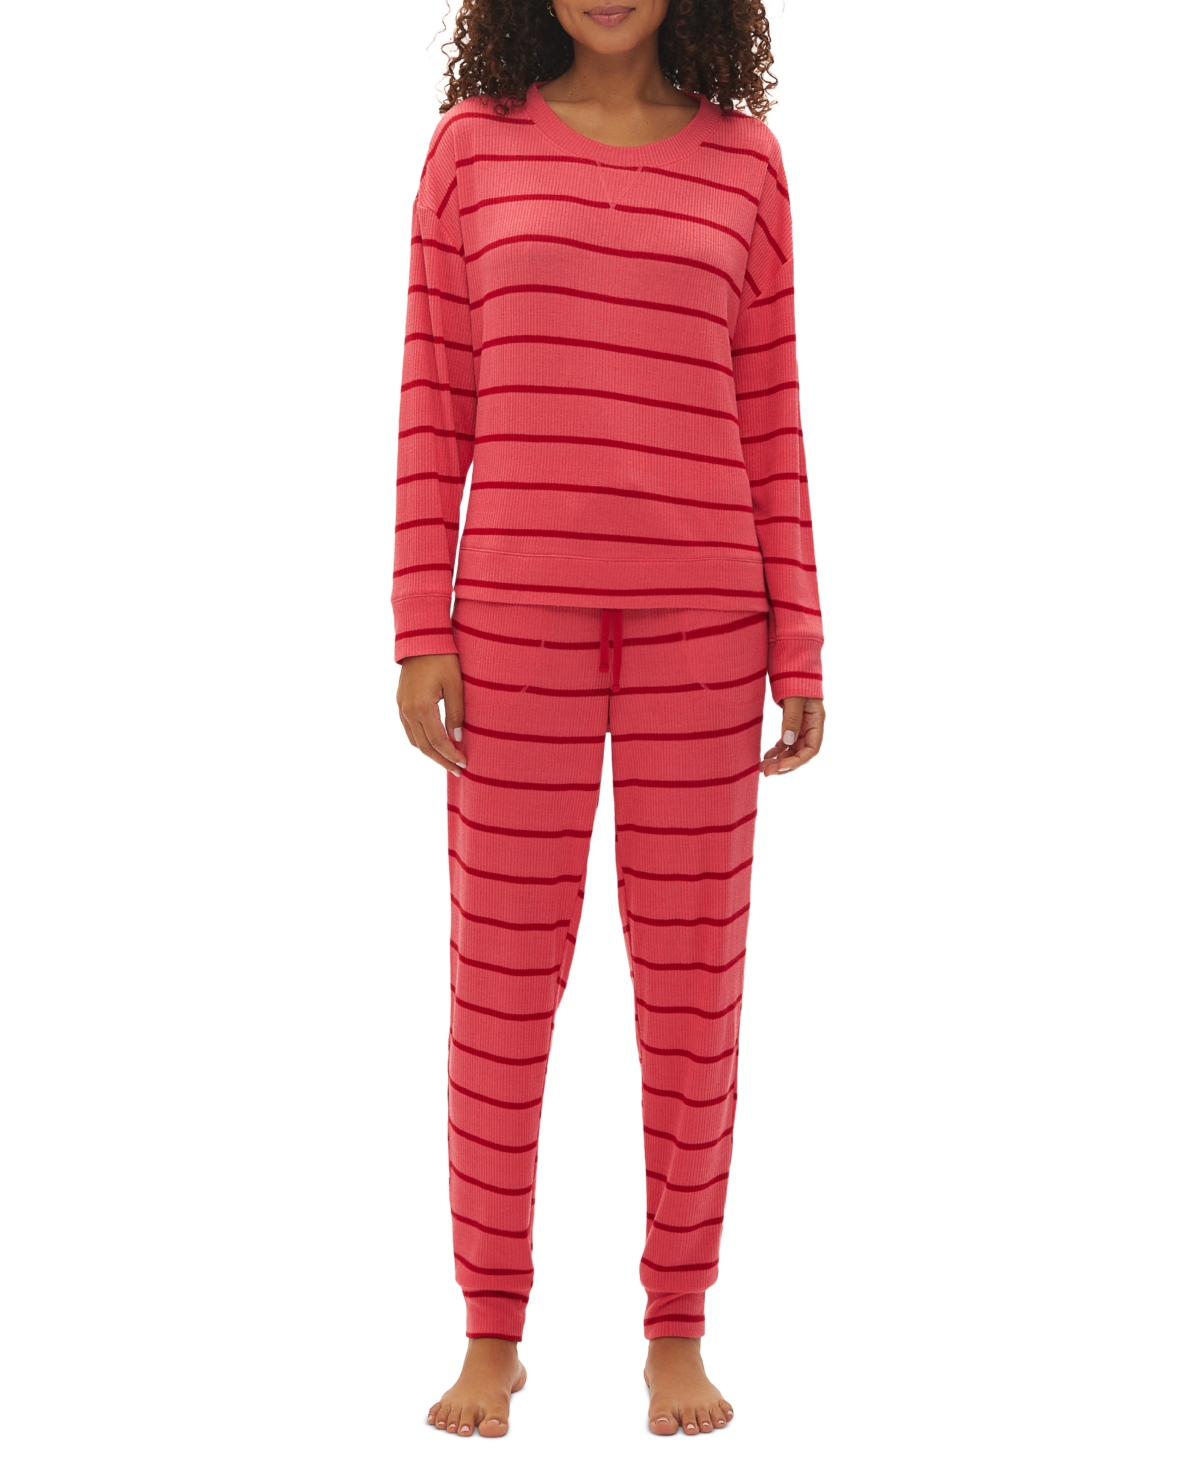 GapBody Women's 2-Pc. Packaged Long-Sleeve Jogger Pajamas Set - Ivory Frost Plaid